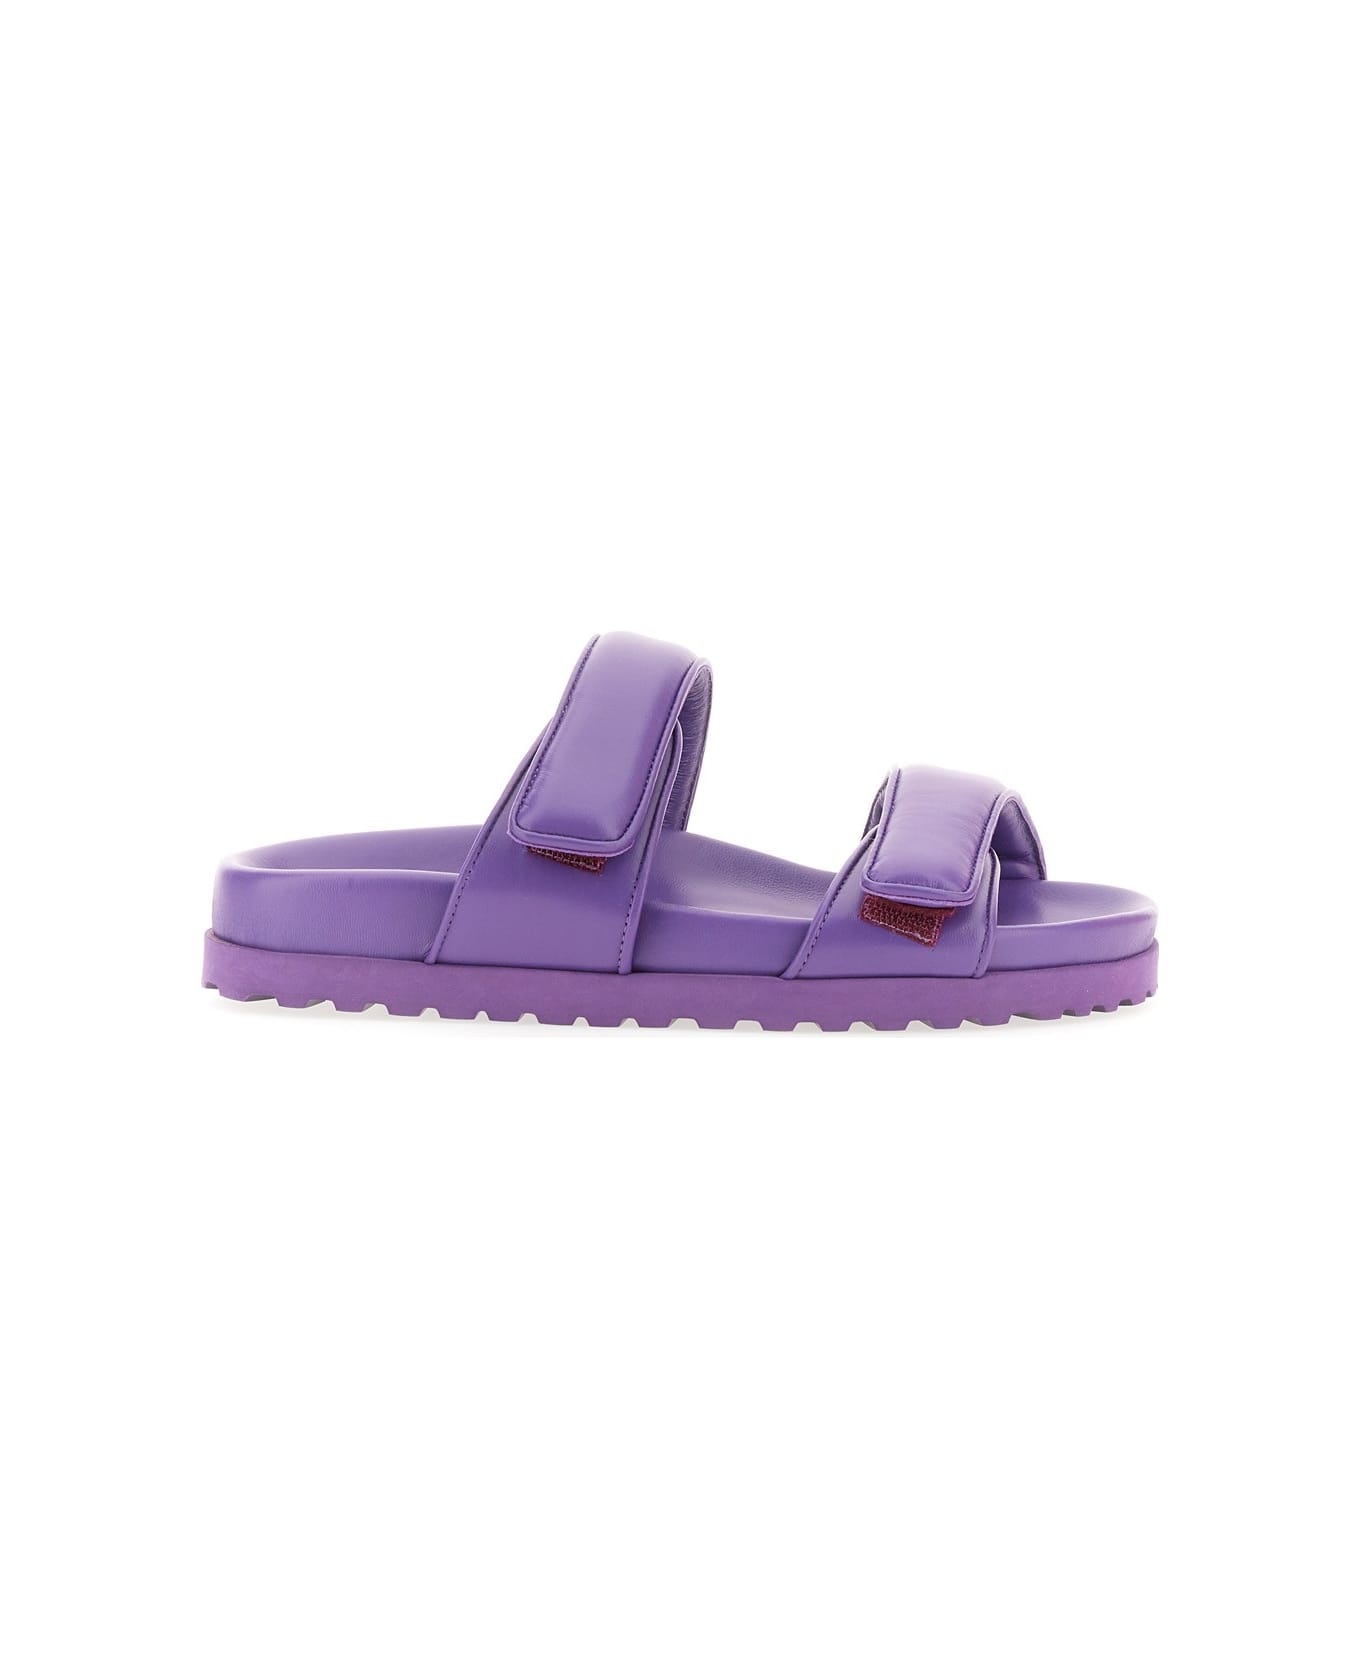 GIA BORGHINI Sandal Perni 11 Gia X Pernille Teisbaek - Purple サンダル